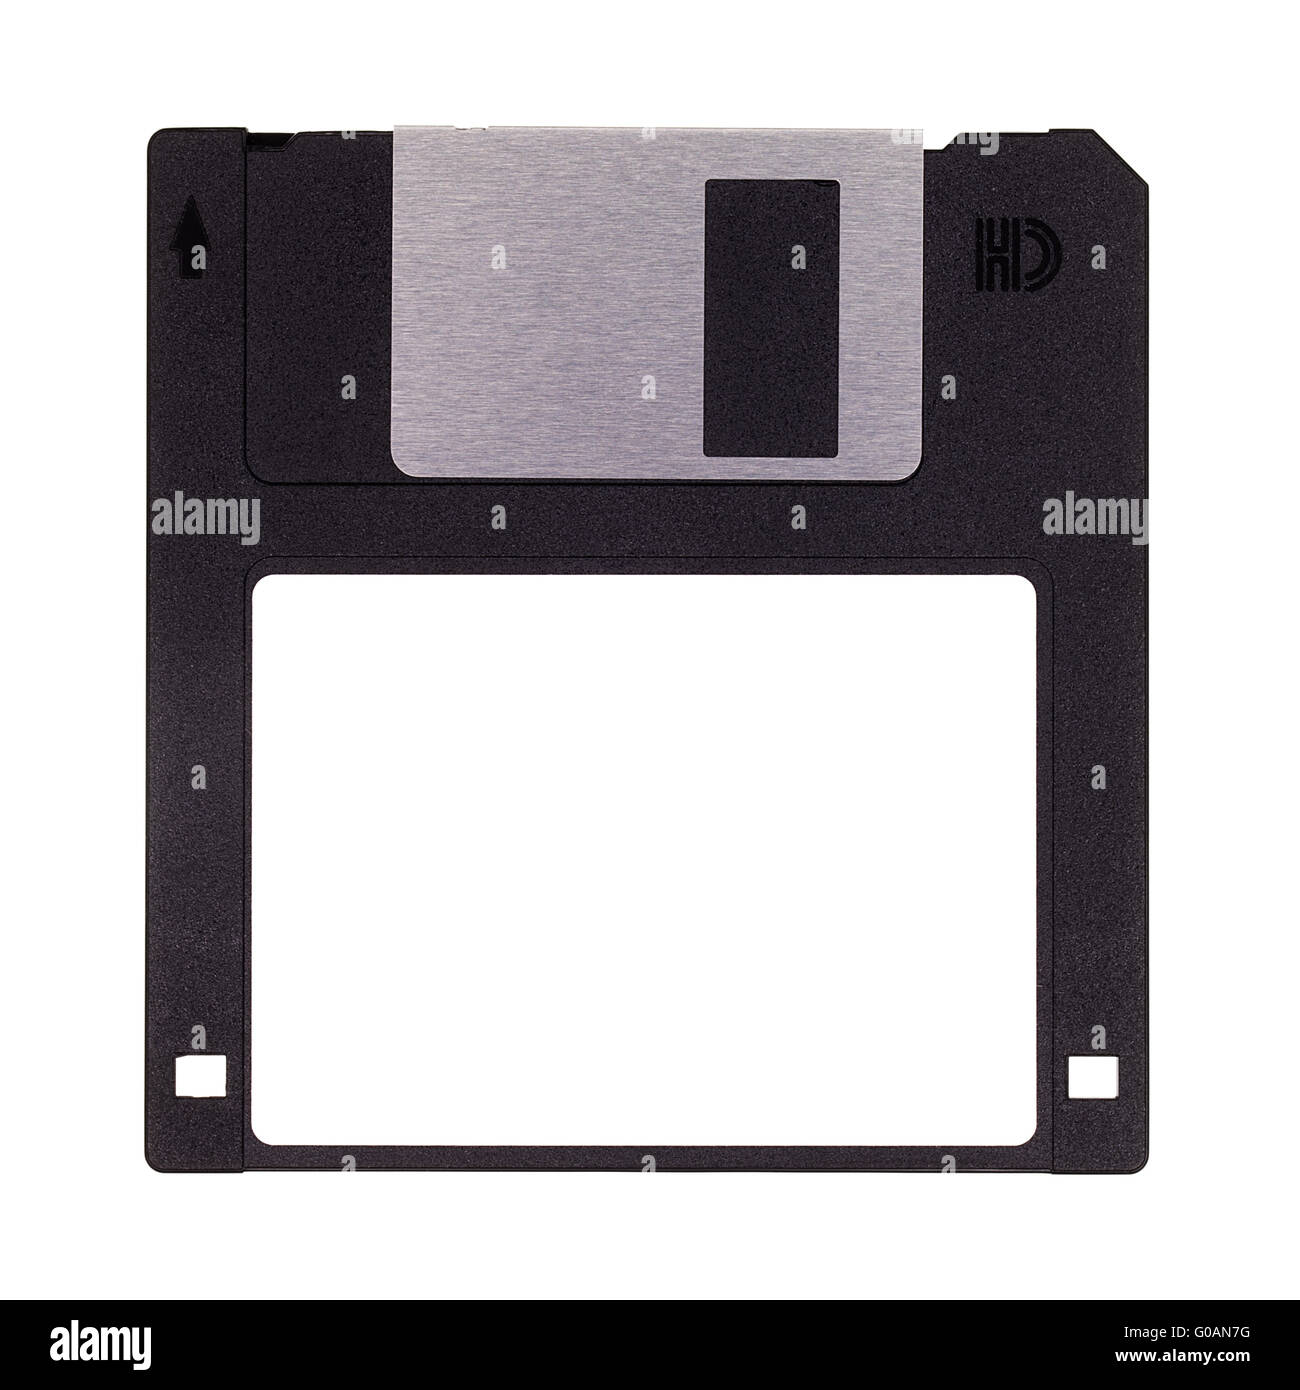 Floppy disk isolato su bianco Foto Stock